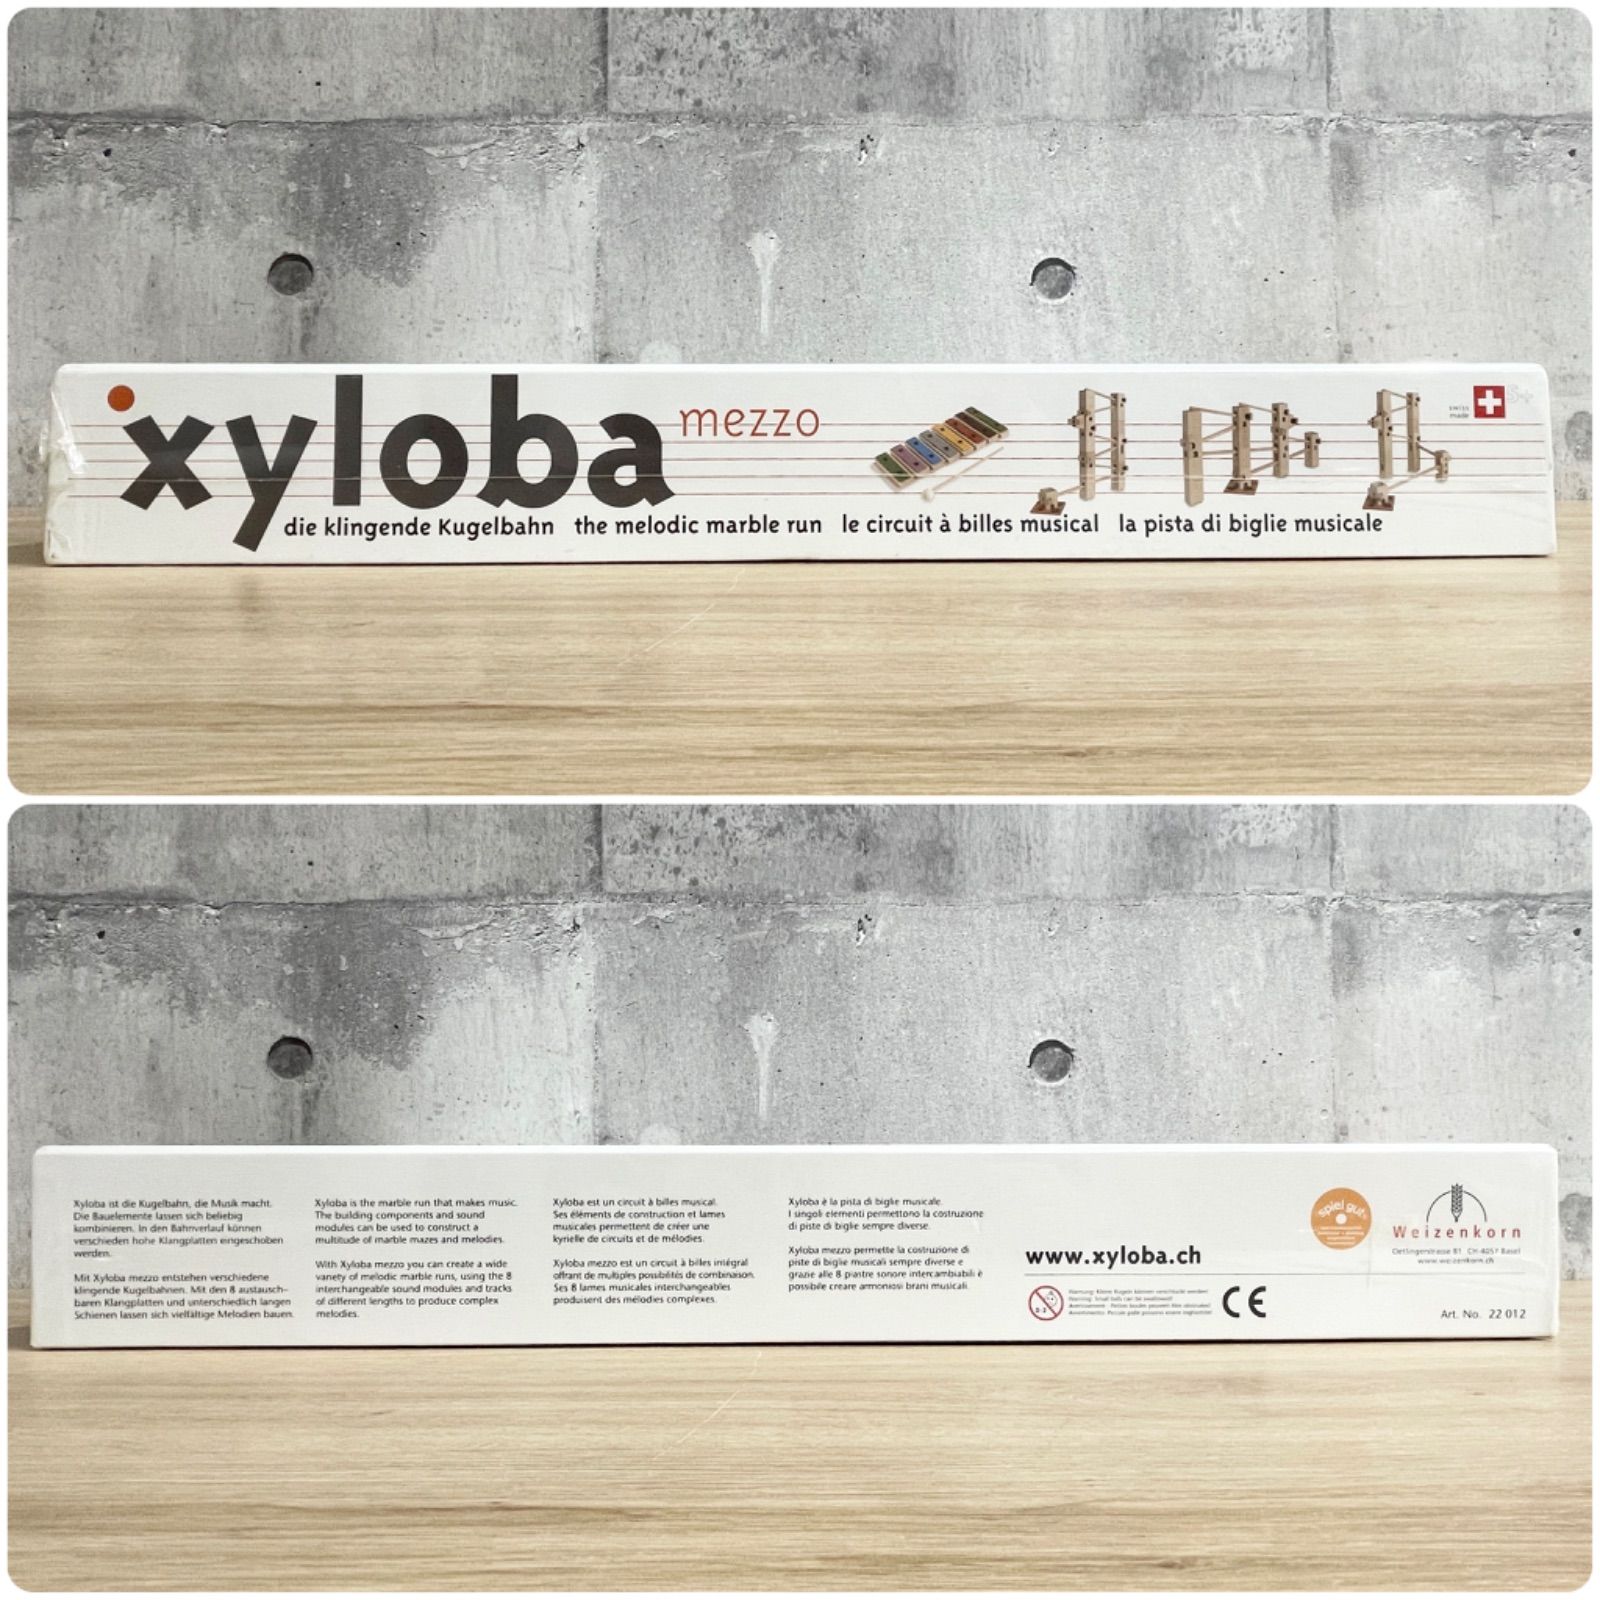 E-06072 Xyloba Mezzo サイロバ メッゾ 木製ブロック スイス生まれ